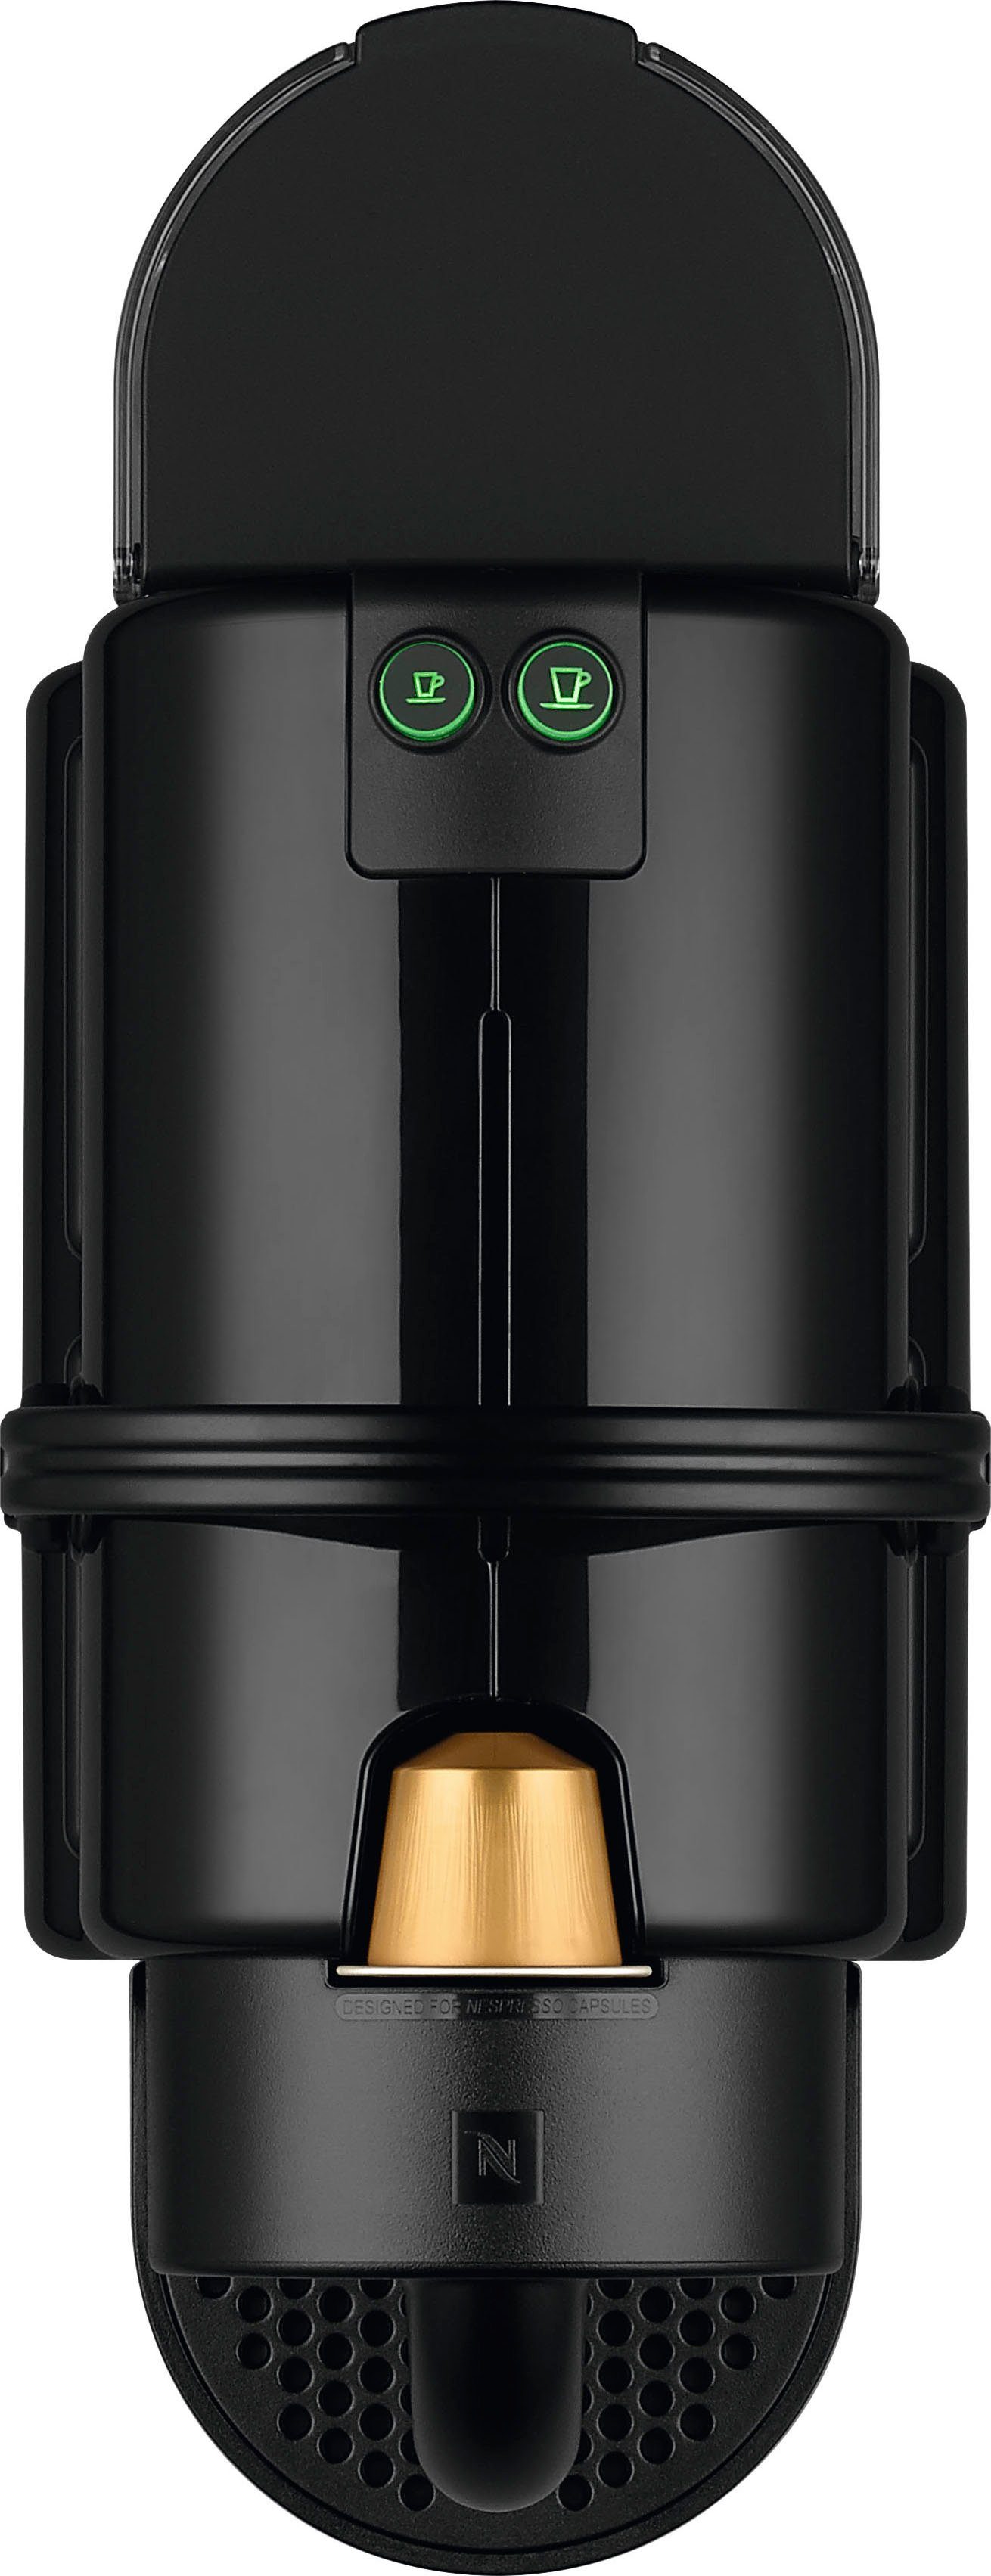 Inissia DeLonghi, Kapselmaschine inkl. Nespresso 7 Black, Willkommenspaket EN von Kapseln mit 80.B